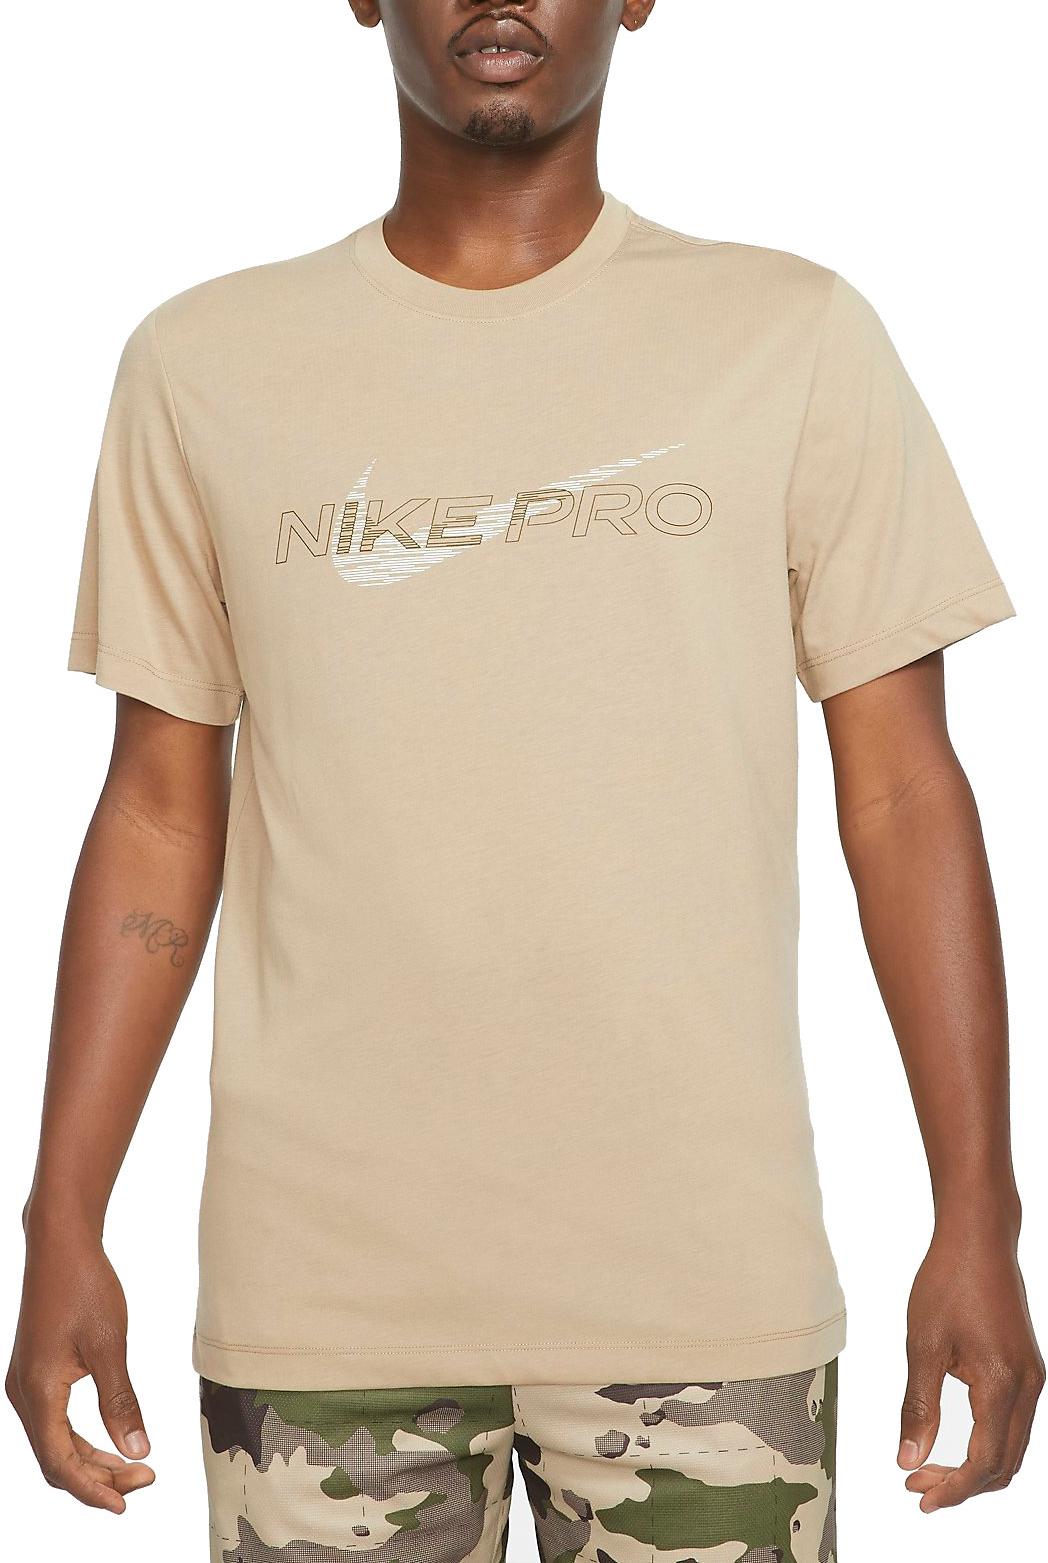 Tee-shirt Nike Pro Dri-FIT Men s Graphic T-Shirt